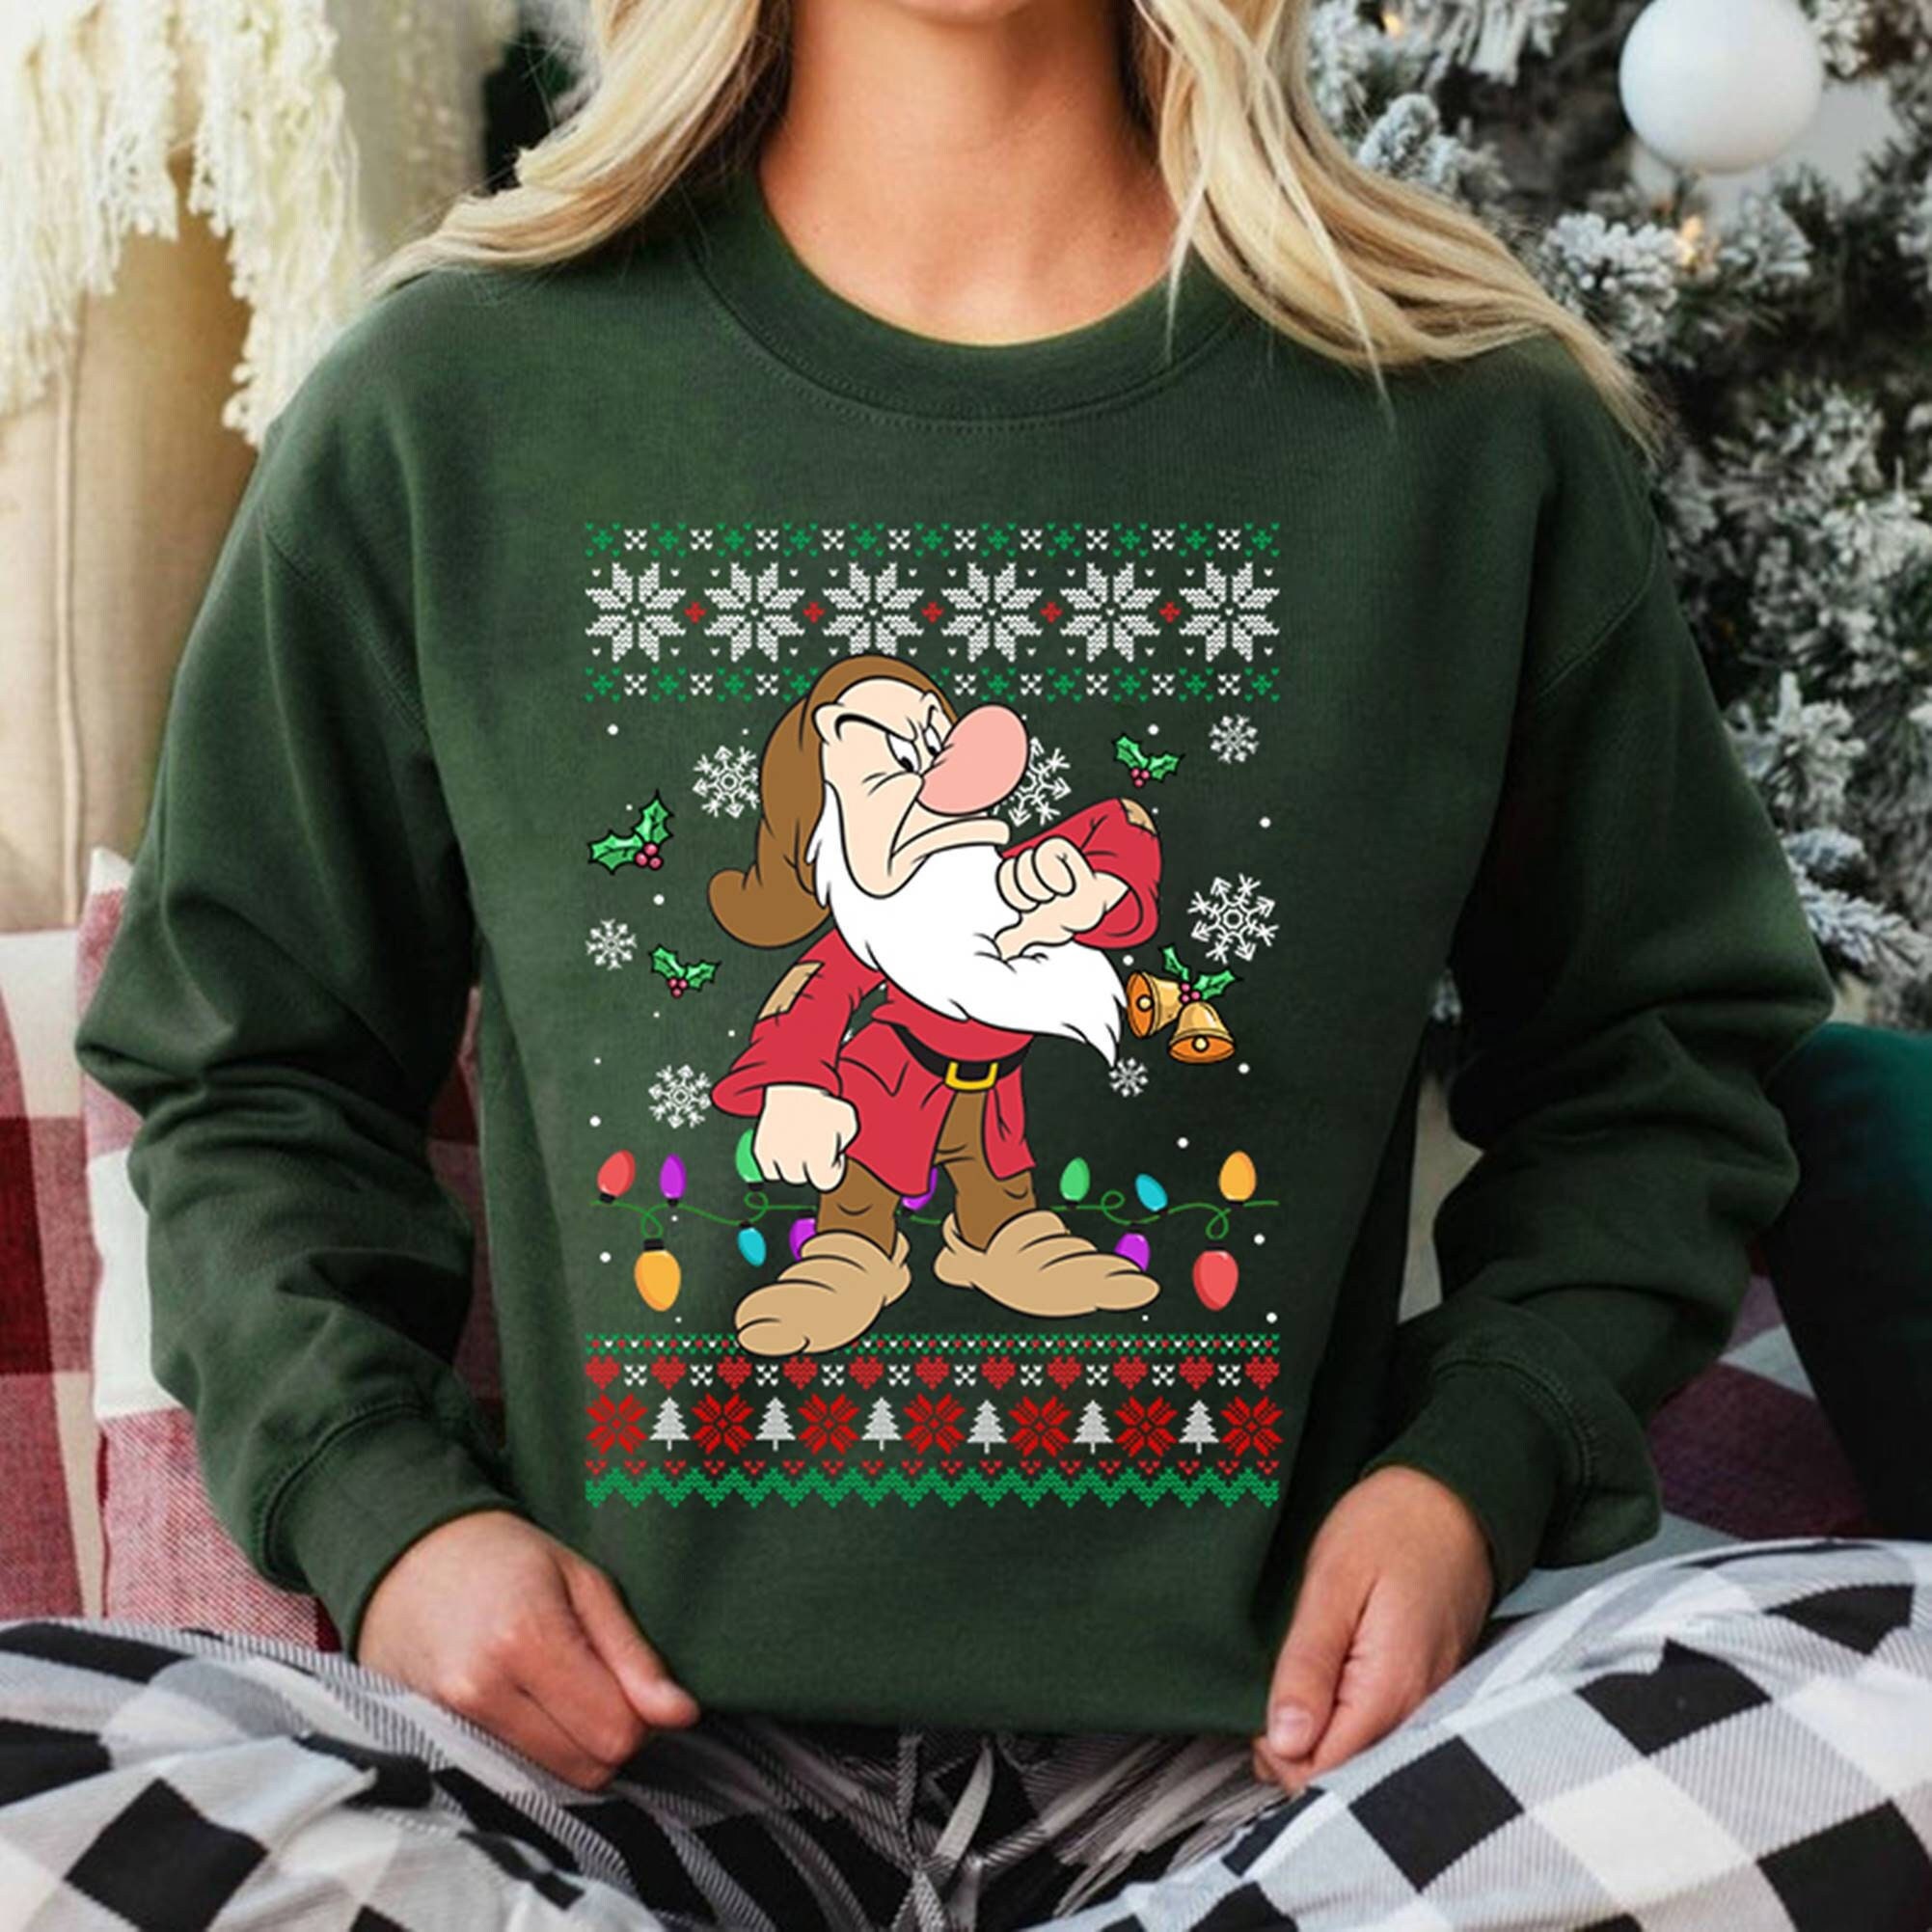 Tstars Cute Santa Claus Ugly Christmas Sweater Ho Ho Holiday Boys Girl – Ugly  Christmas Sweater Party